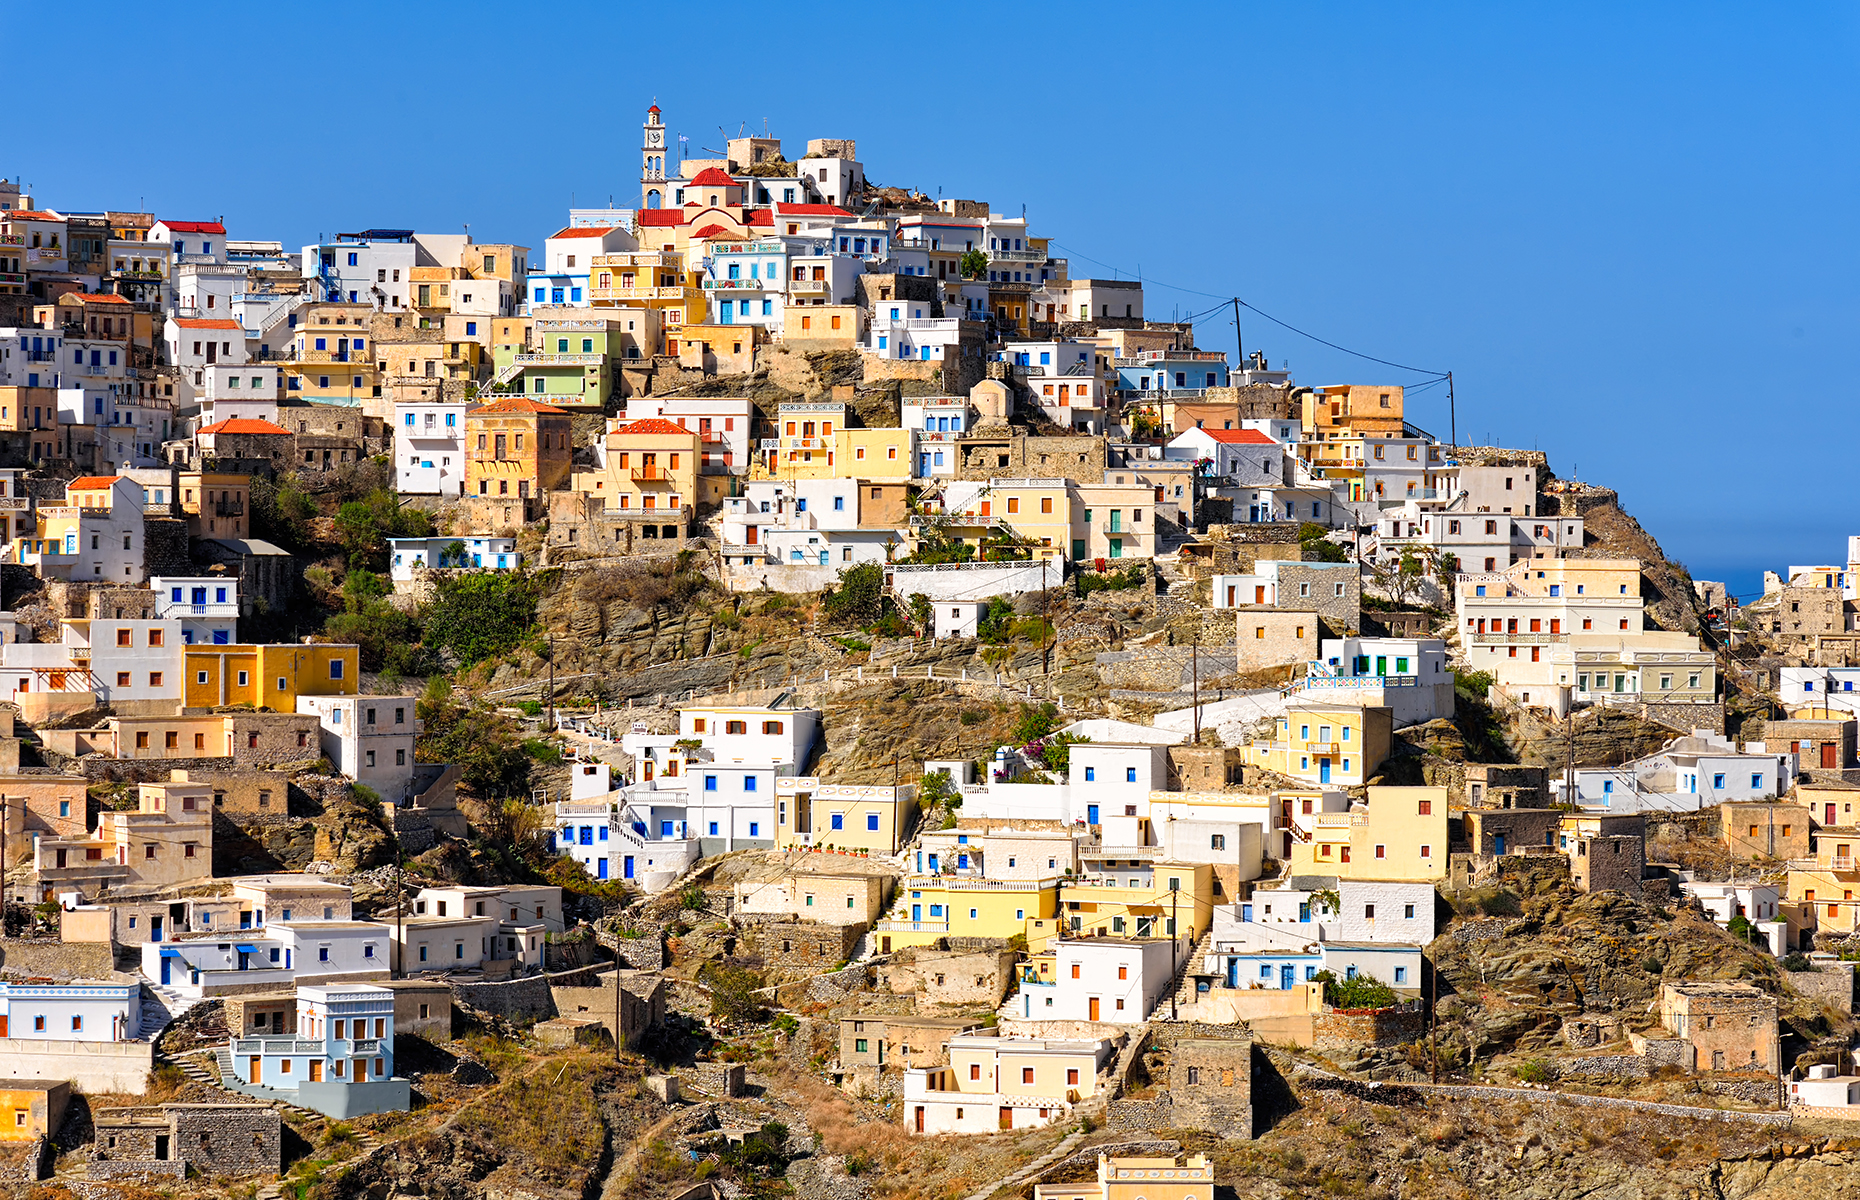 Karpathos, Greece (Image: Sergey Kilin/Shutterstock)